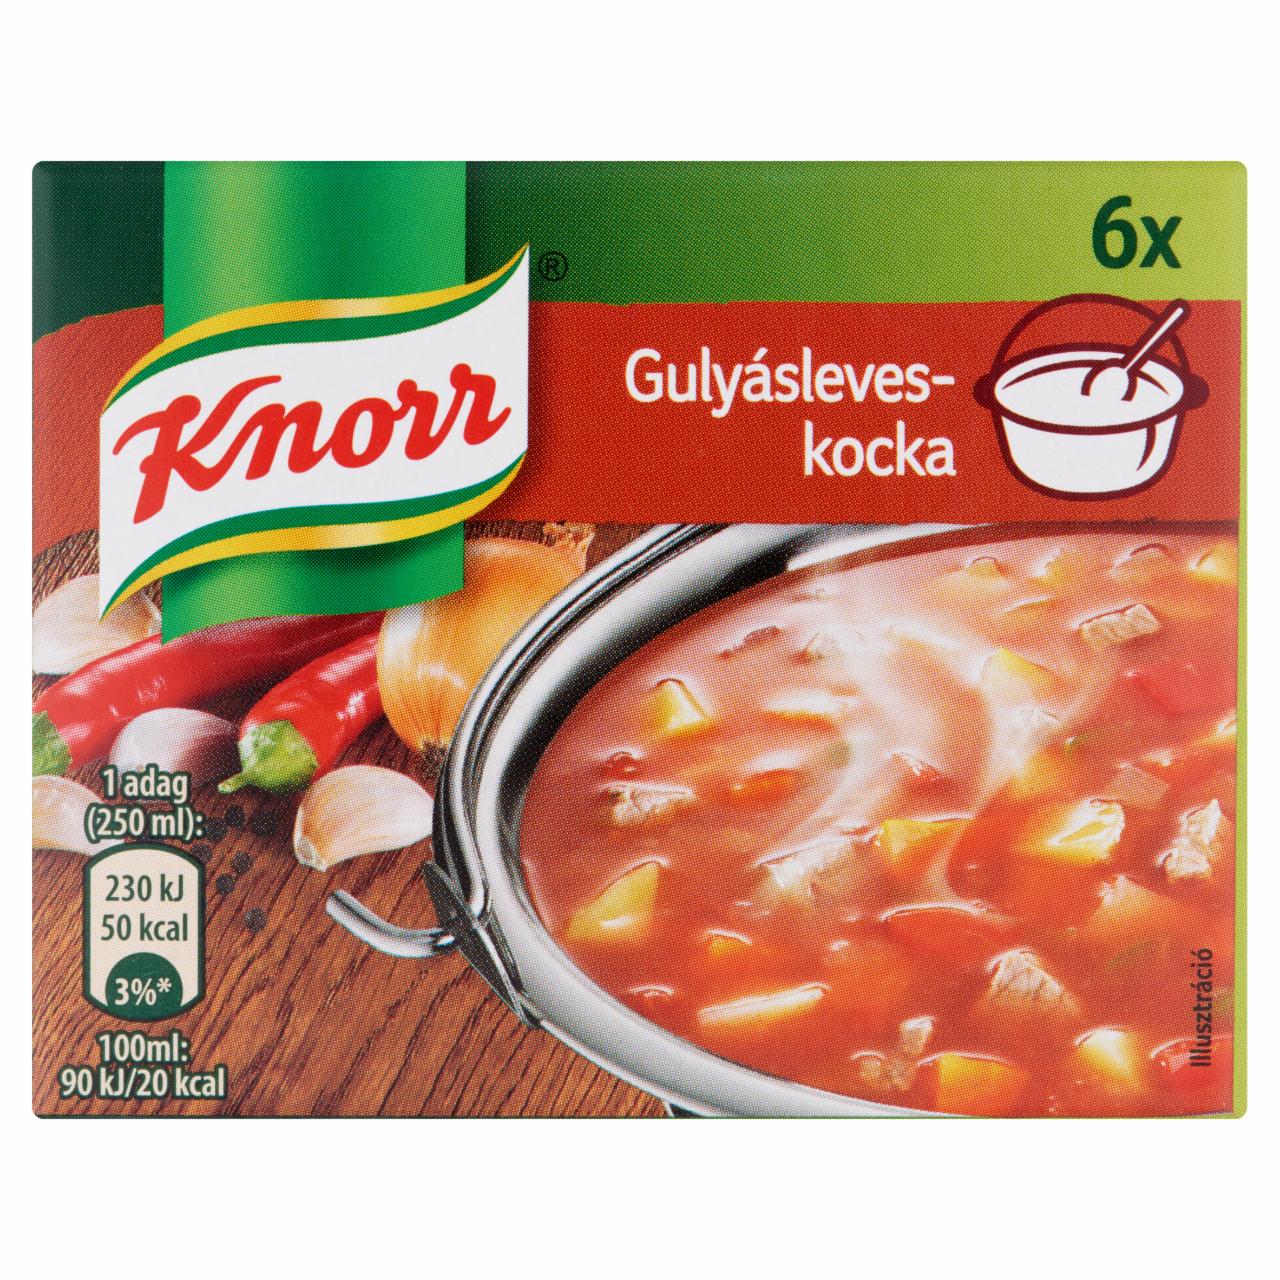 Képek - Knorr gulyásleveskocka 6 db 60 g